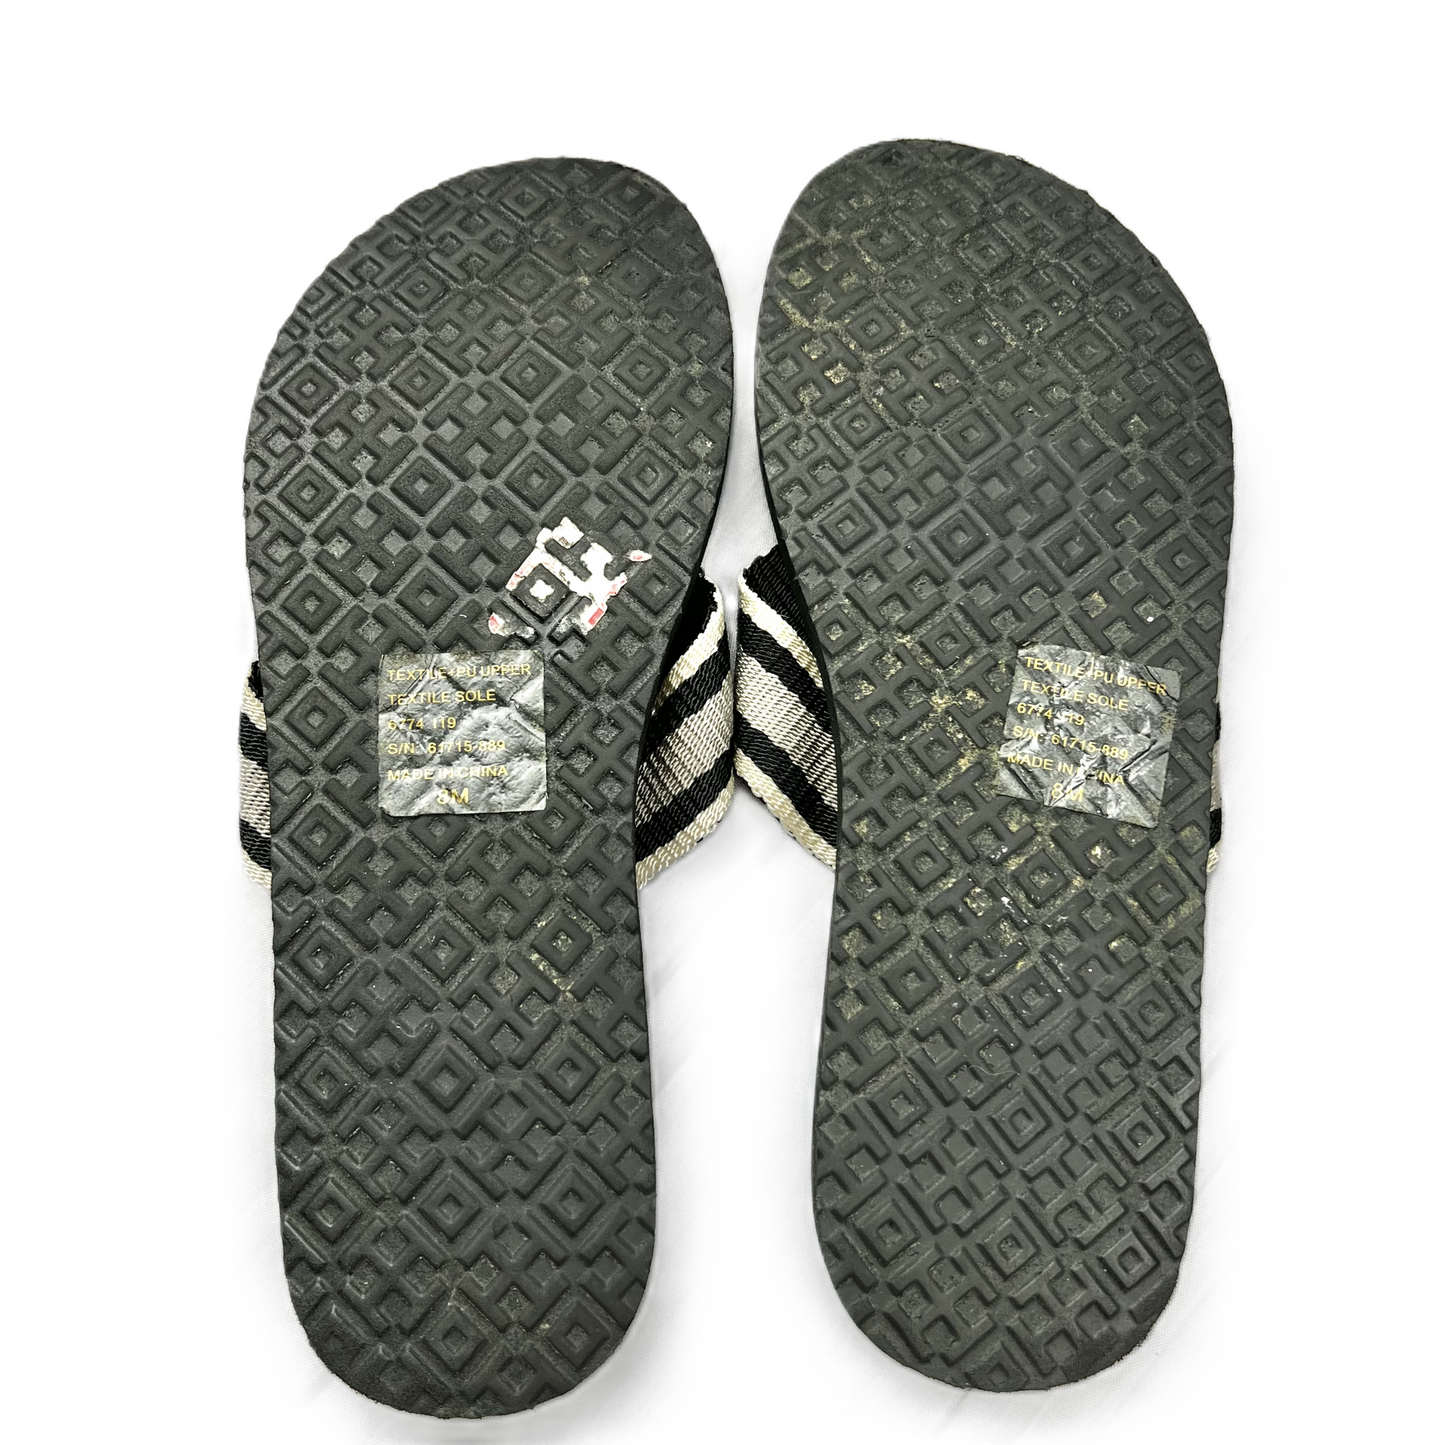 Black & Grey Sandals Flip Flops By Tory Burch, Size: 8